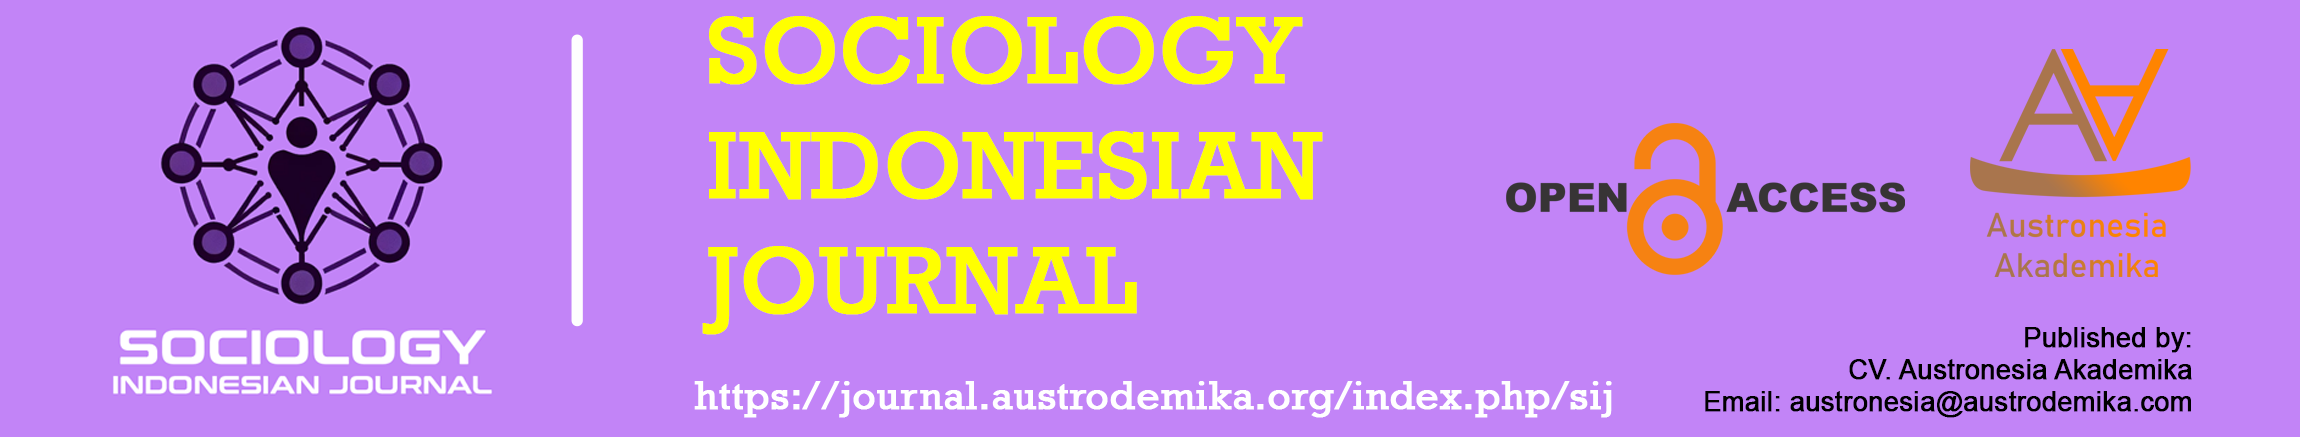 Sociology Indonesian Journal